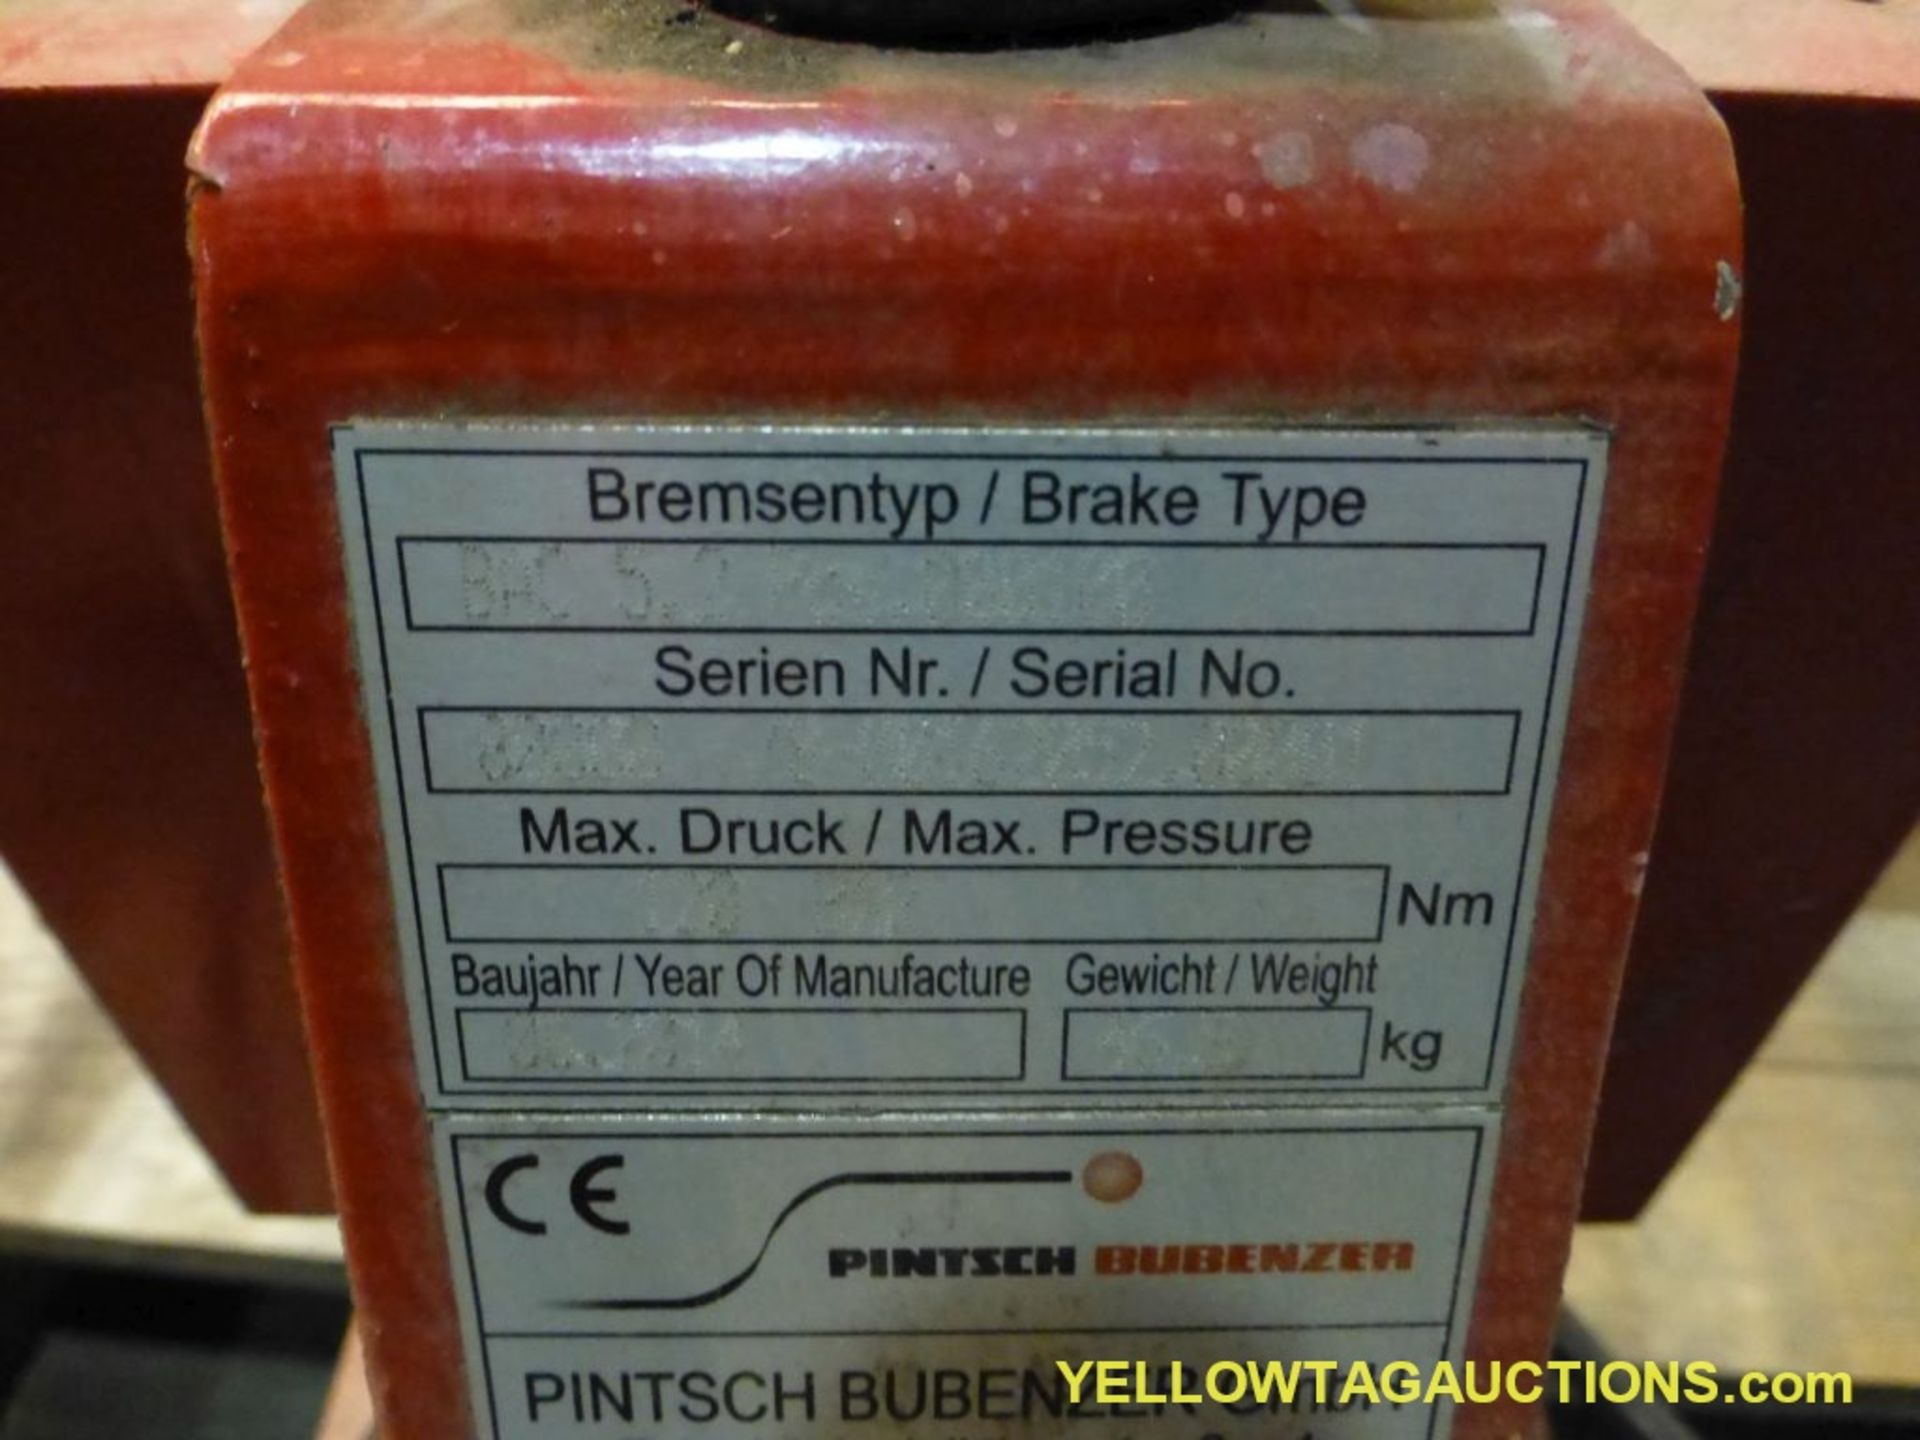 Pintsch Bubenzer Brake | Model No. BAC 5.2; Pos.000100; S/N: 8000/8-00162052.0001 - Image 4 of 4